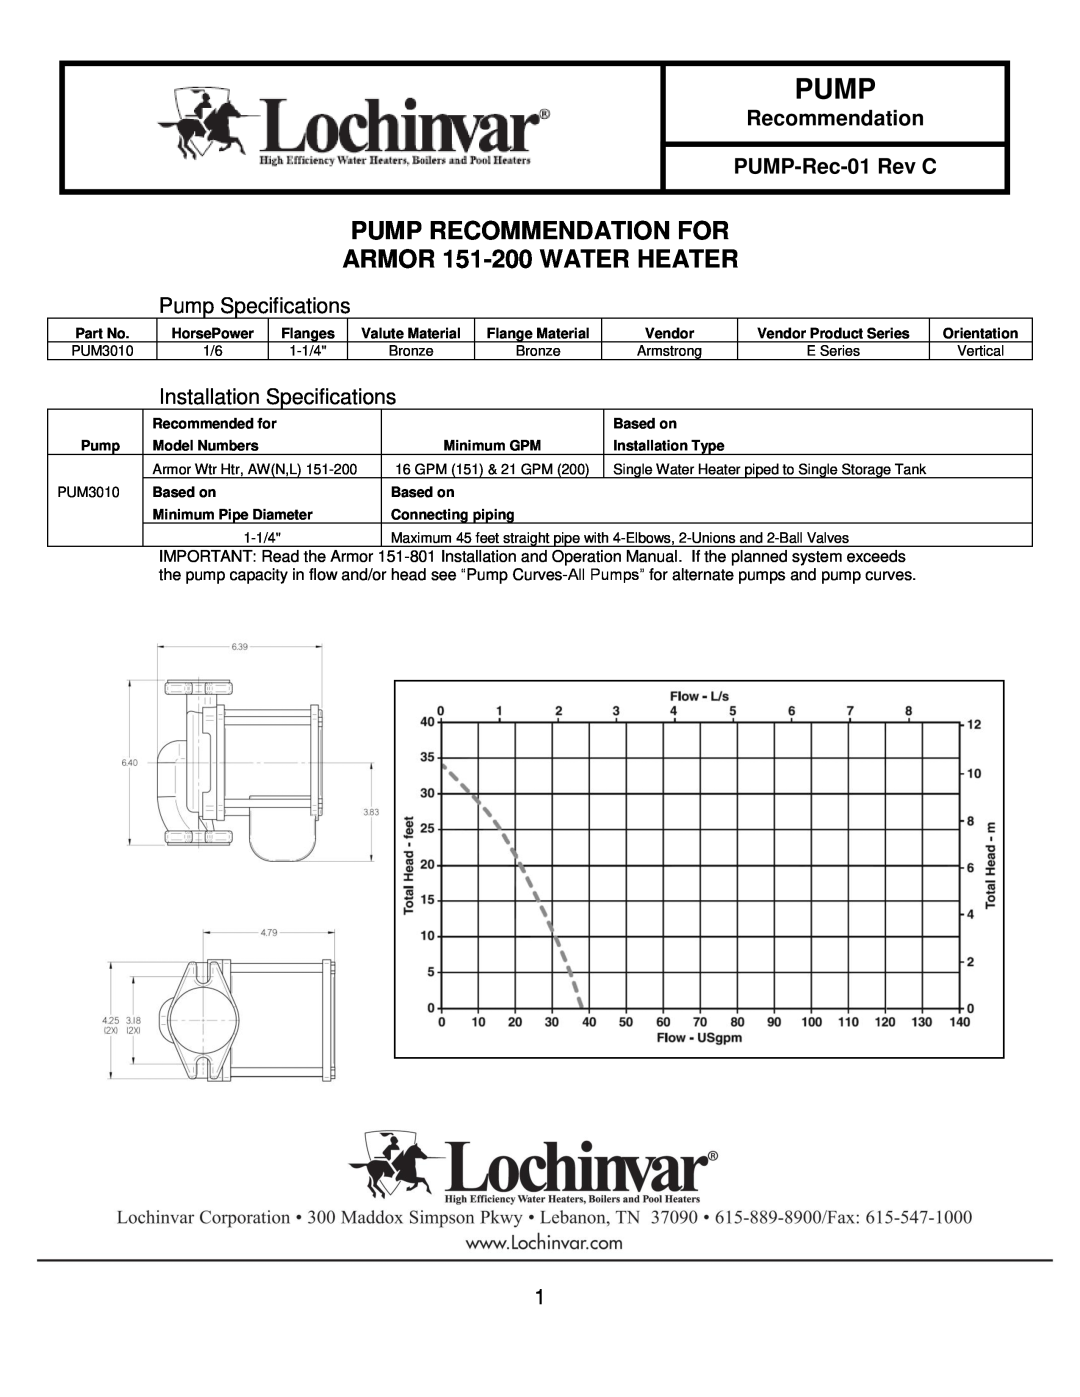 Lochinvar specifications Pump Recommendation For, ARMOR 151-200WATER HEATER, Pump Specifications, PUMP-Rec-01Rev C 